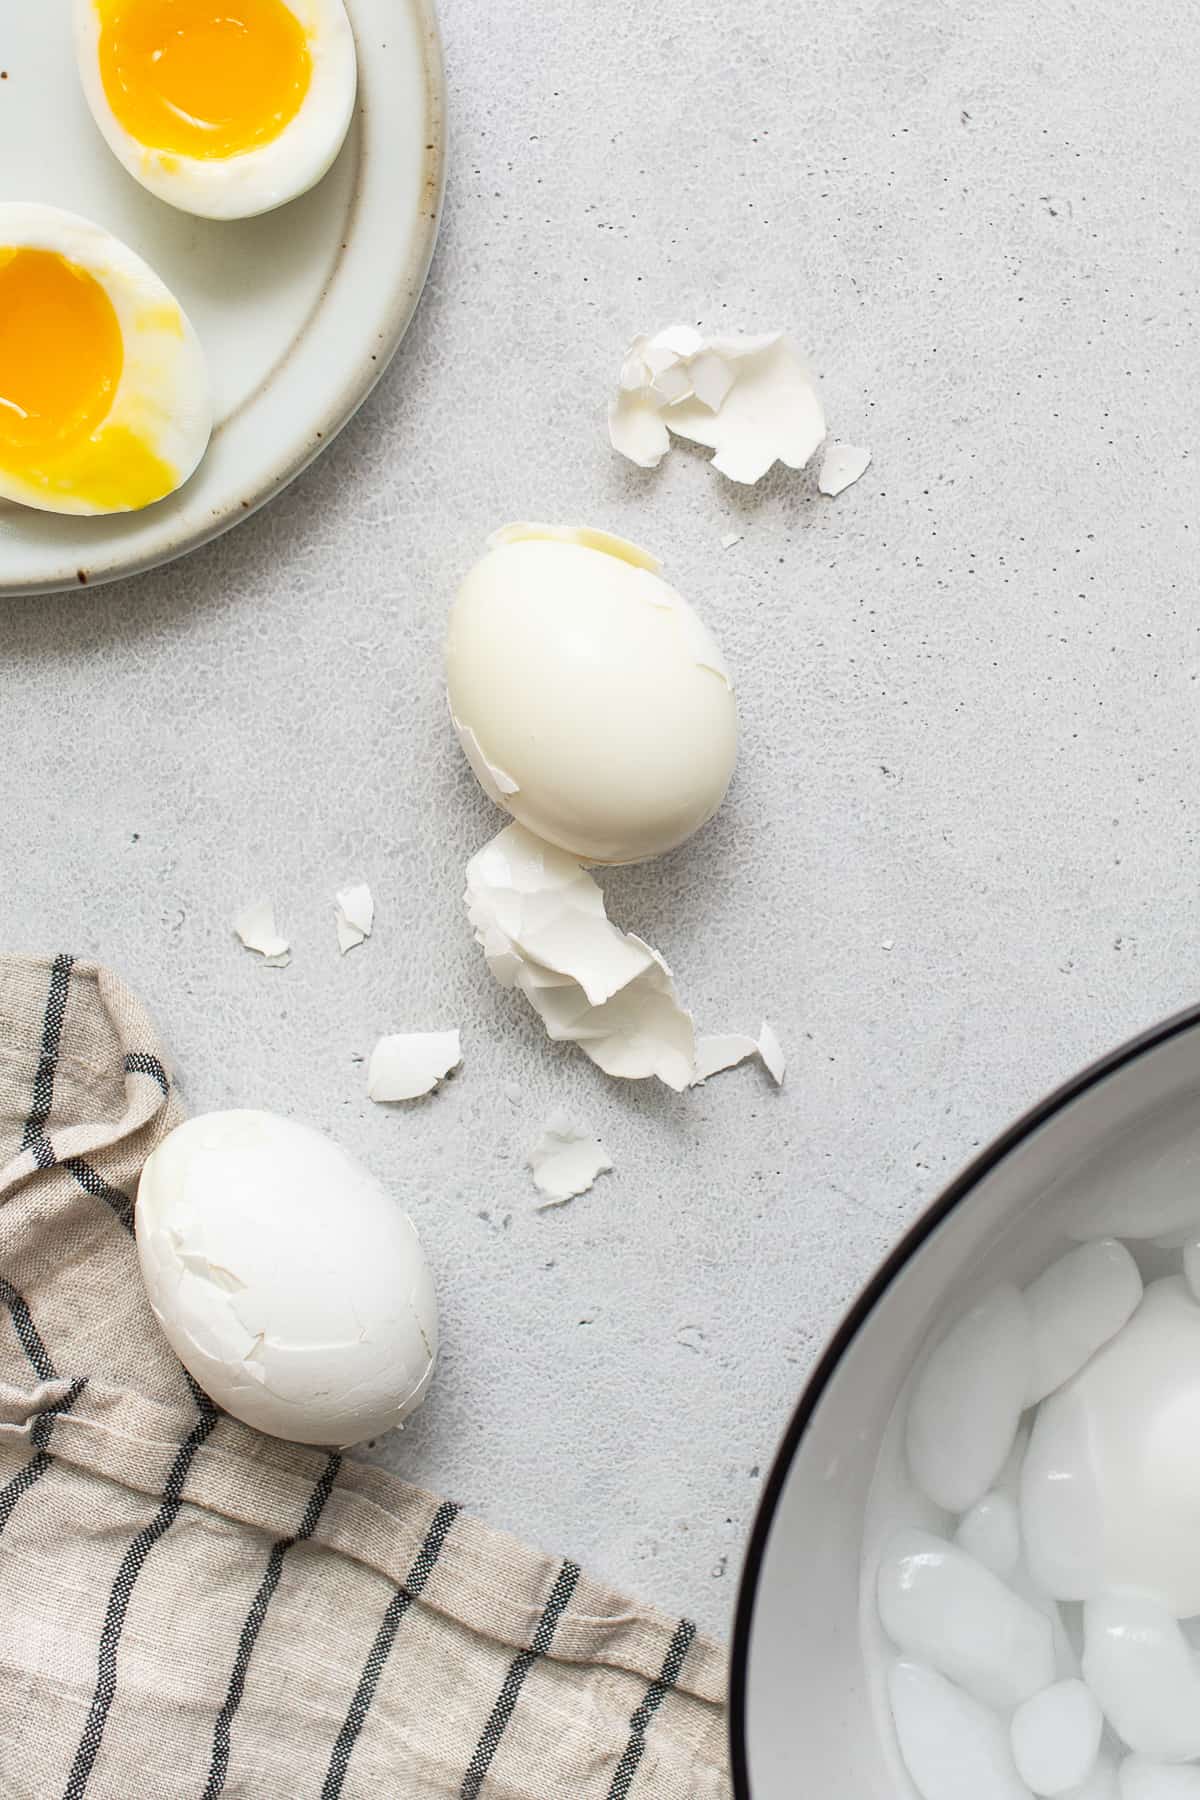 تخم مرغ آب پز نرم پوست گرفته.